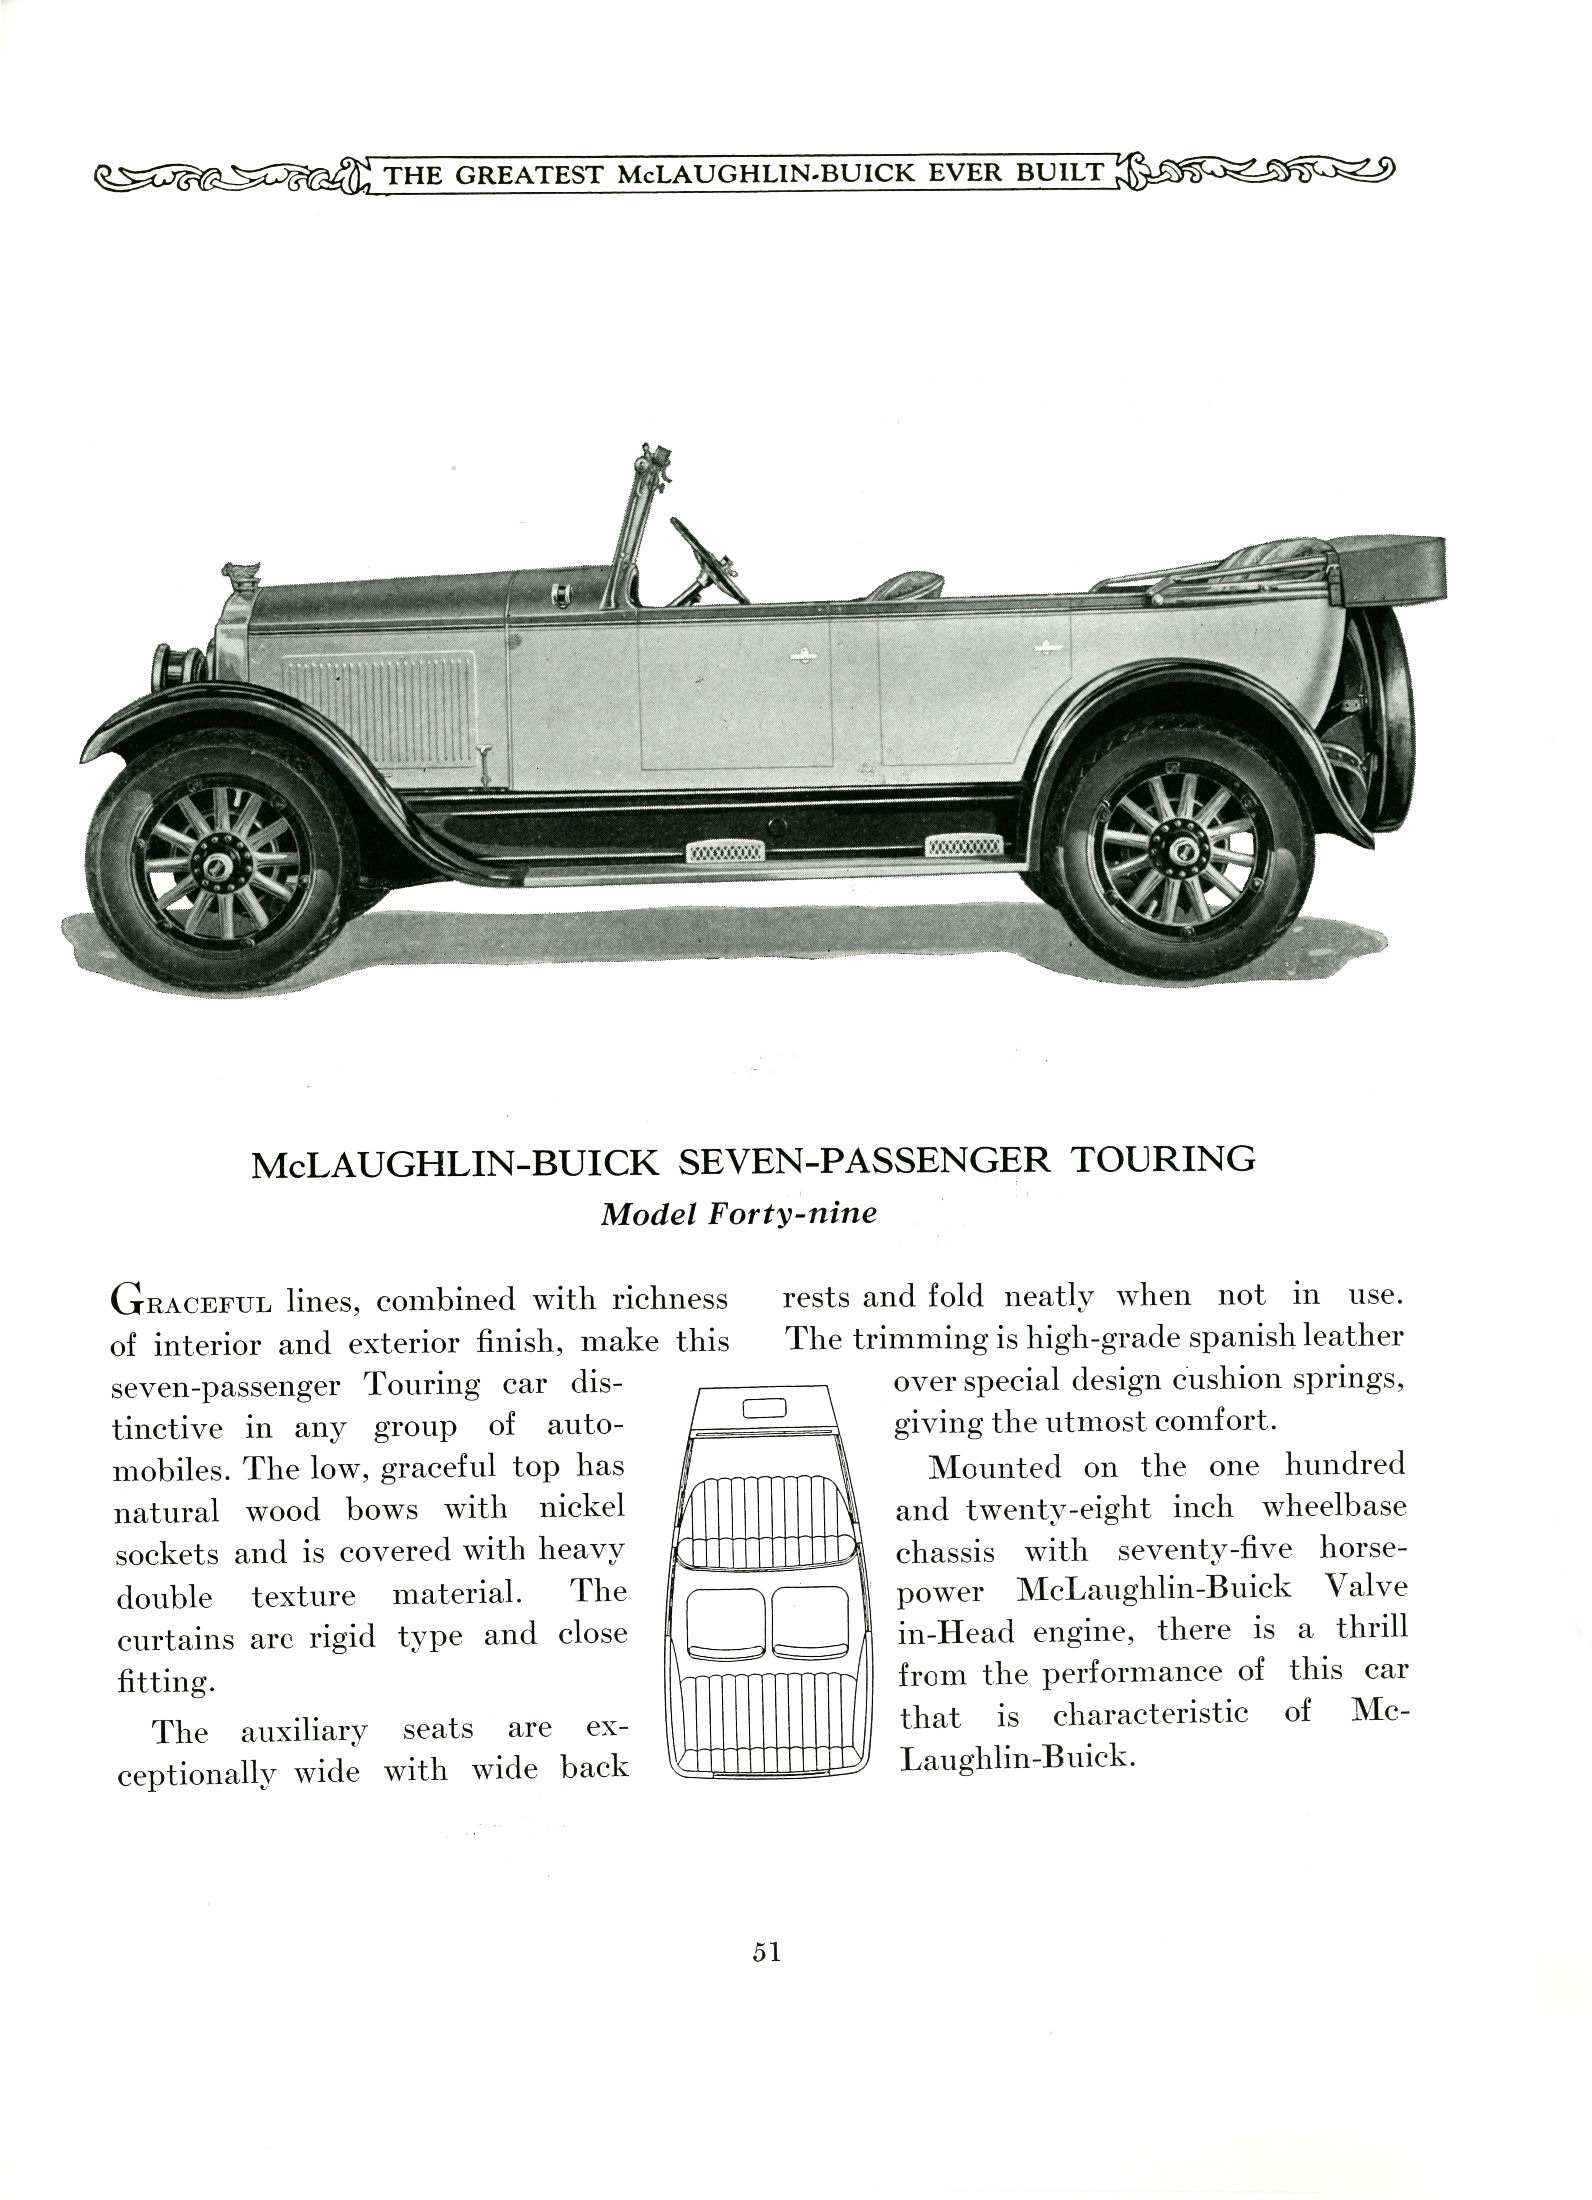 1930 McLaughlin Buick Booklet-51